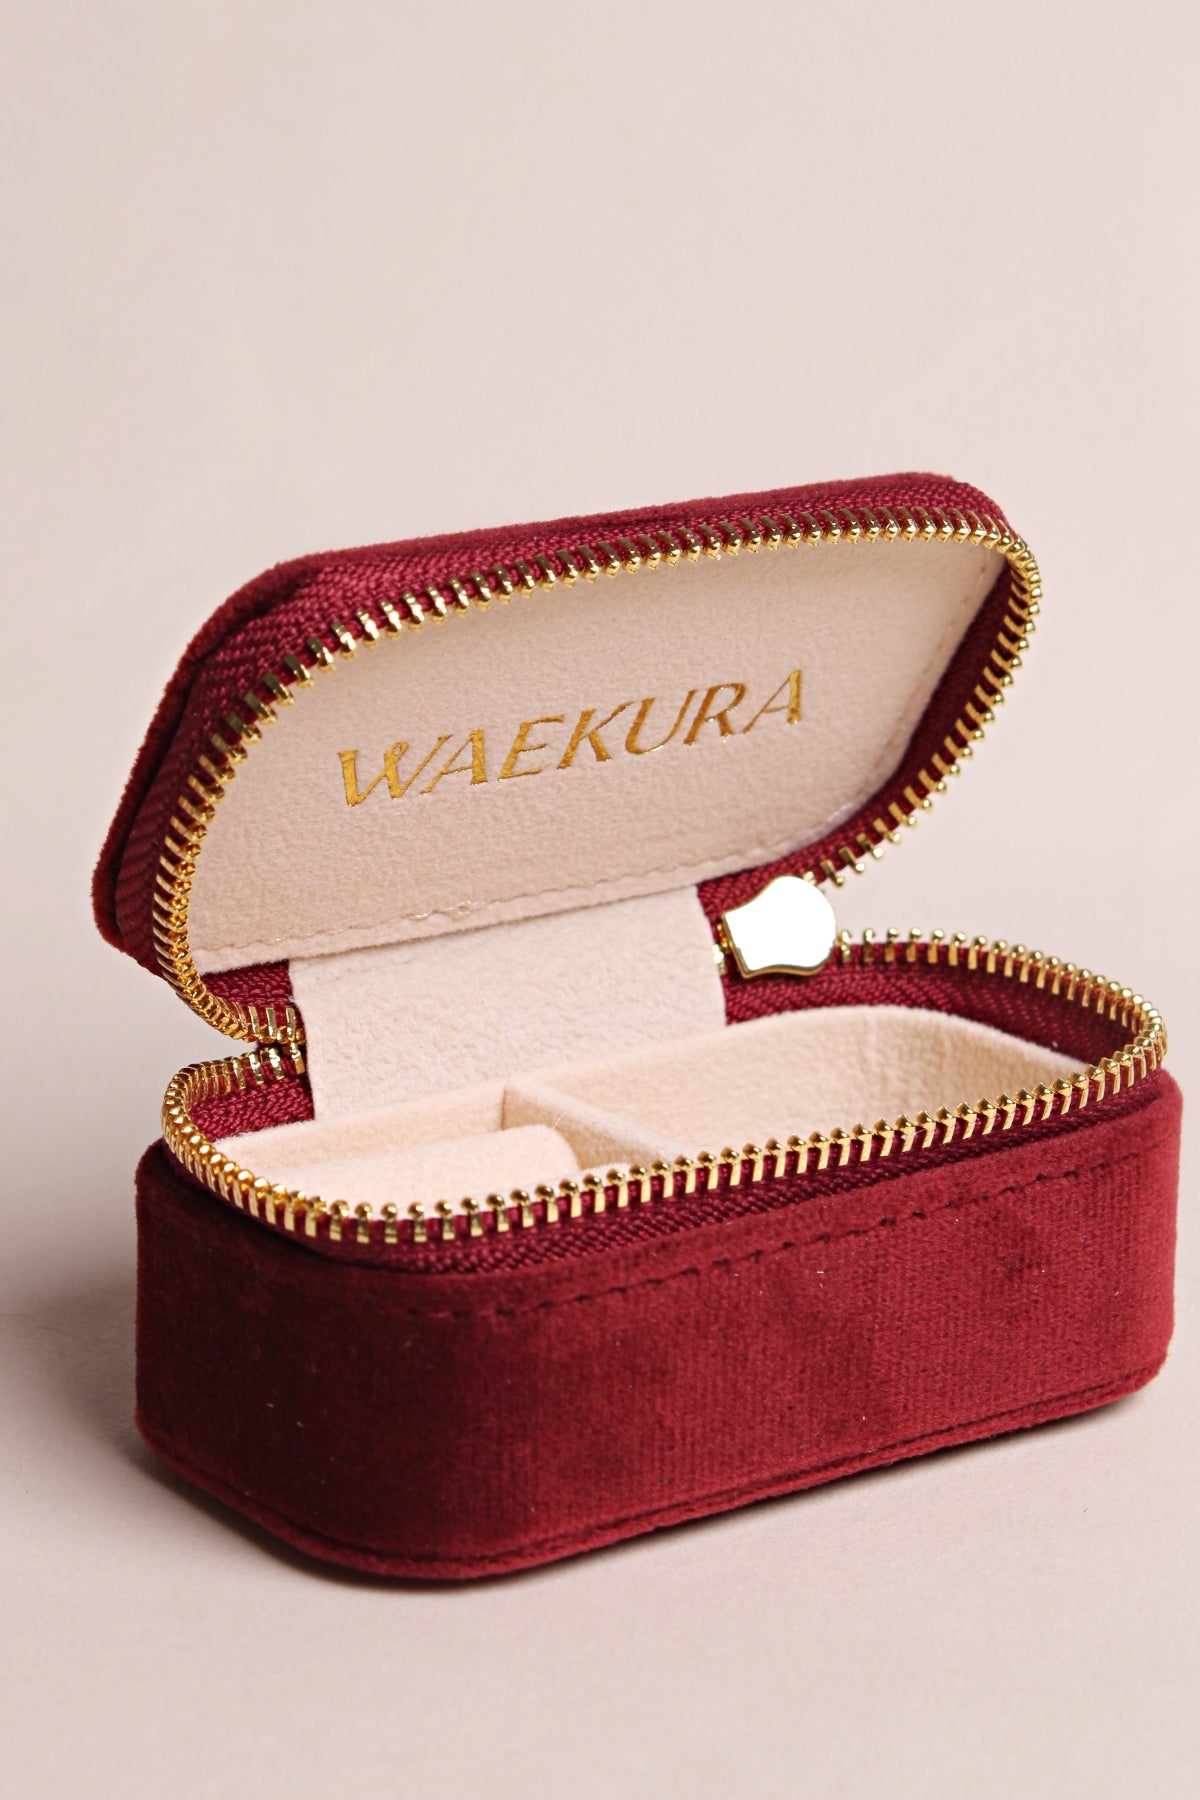 La Mini Boîte à Bijoux - Morello cherry red - waekura